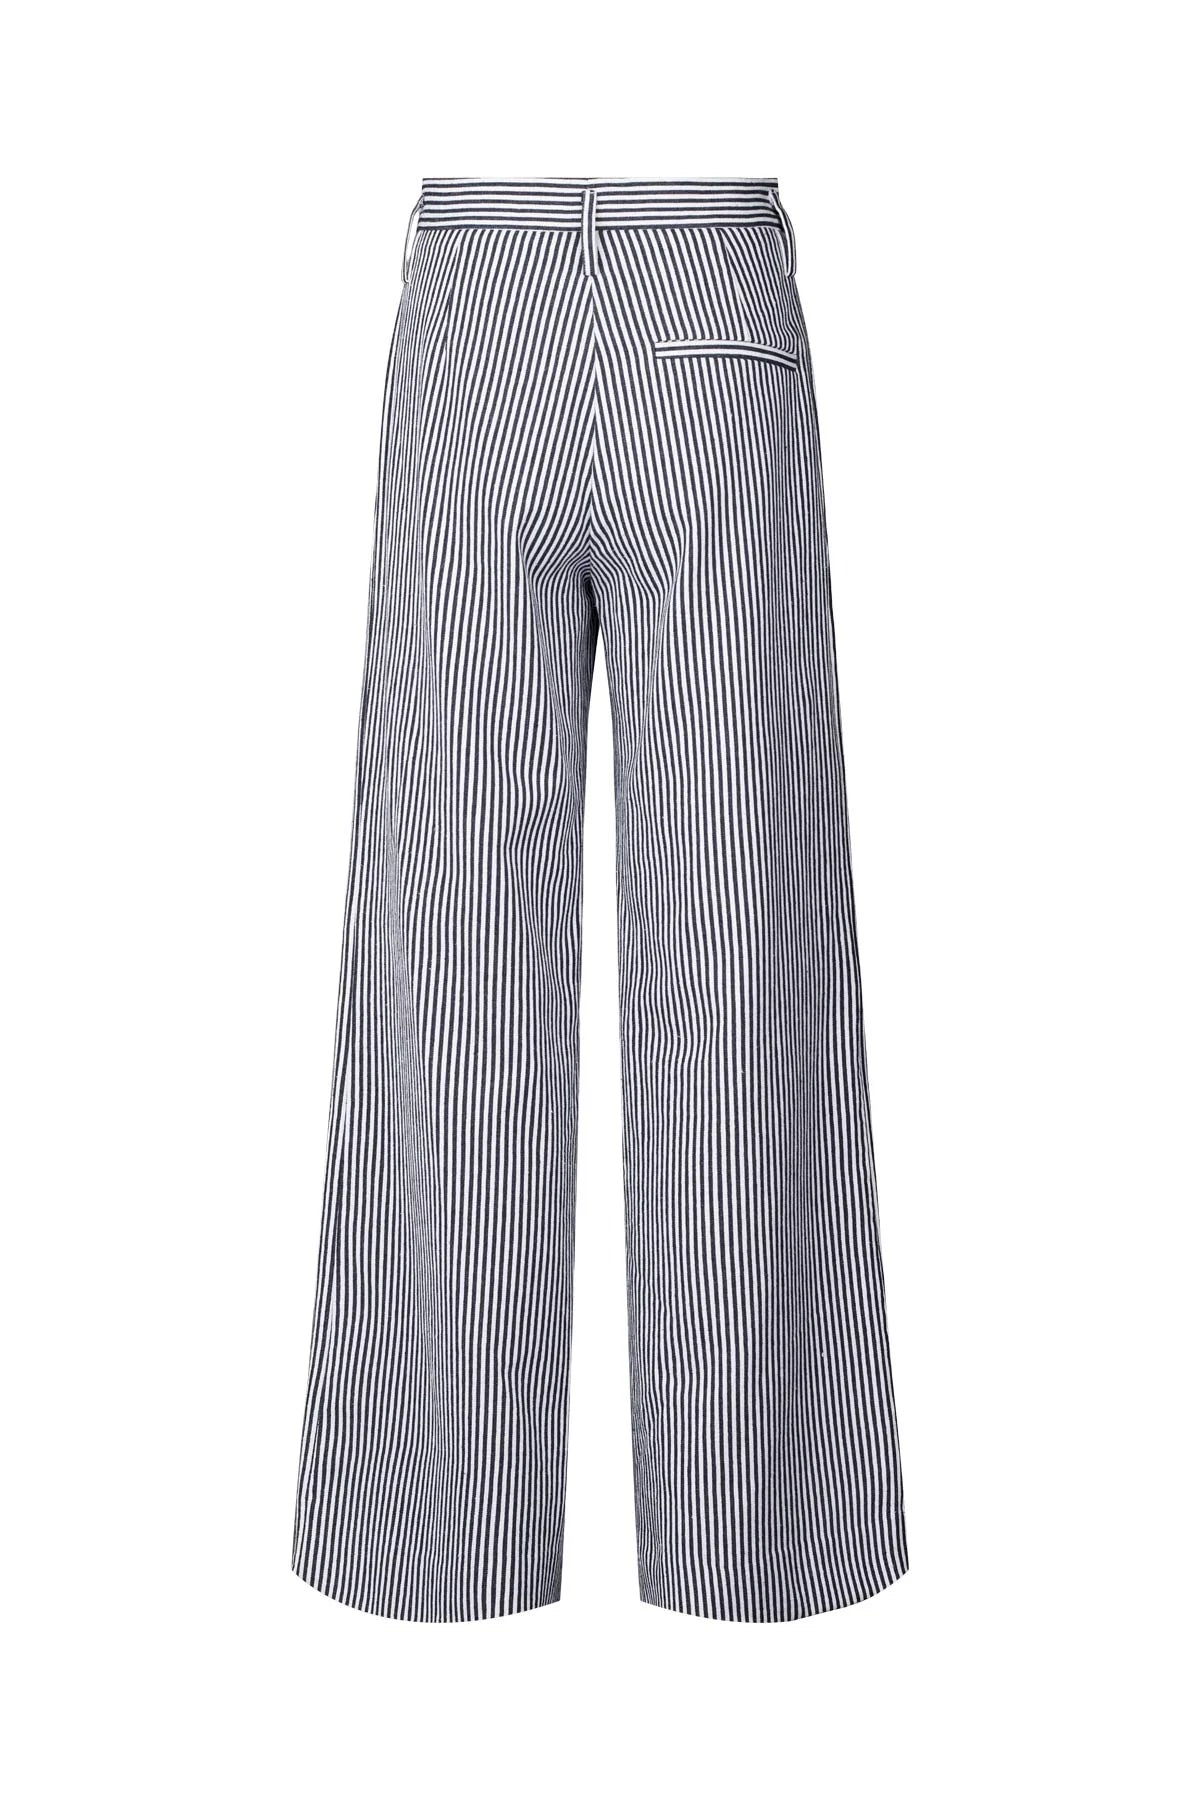 Julia tailorig pant in blue stripe